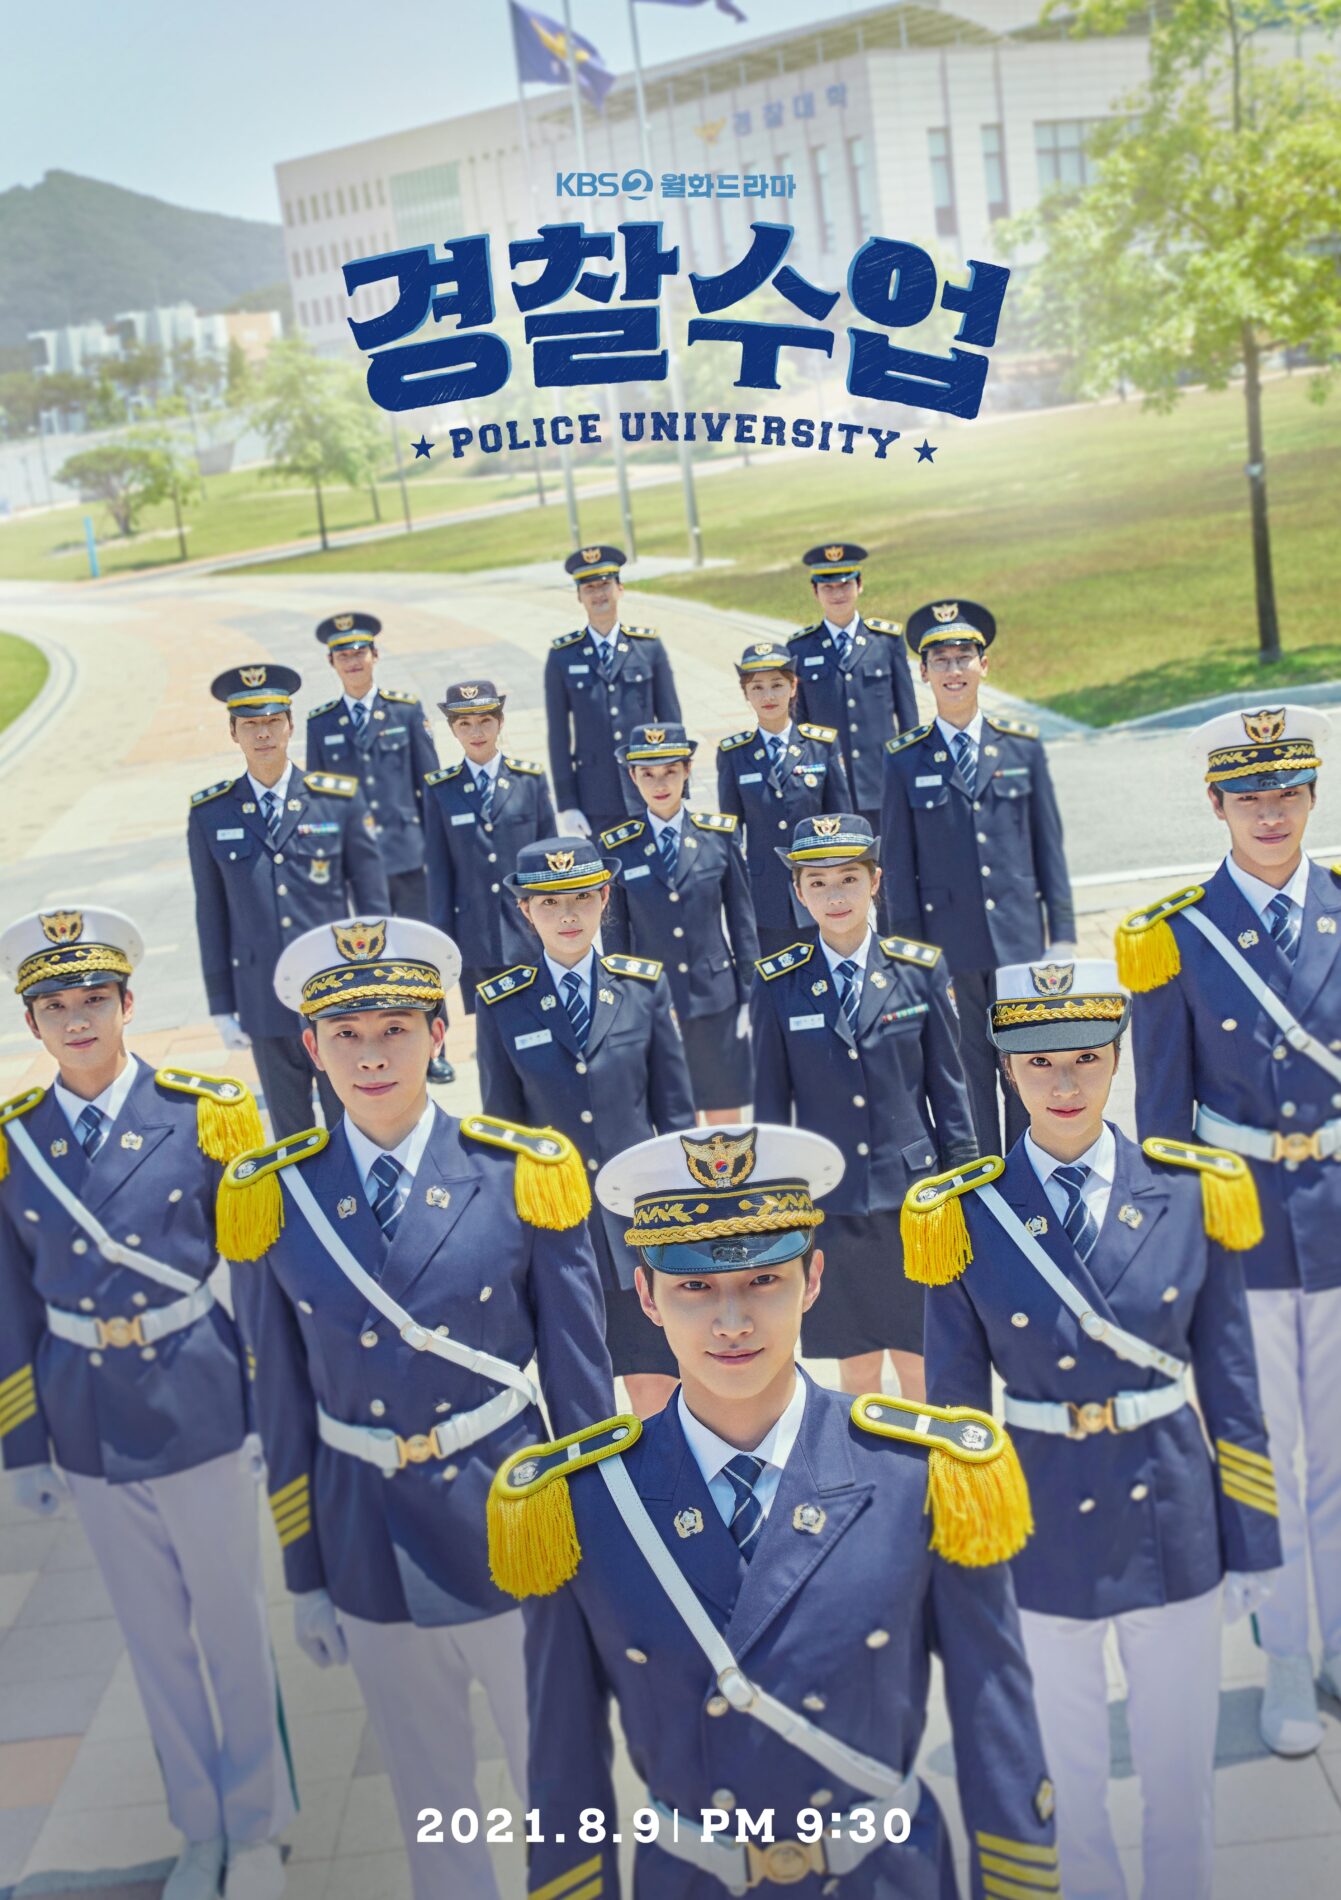 Police University 2021 مسلسل أكاديمية الشرطة الكوري مترجم + تقرير